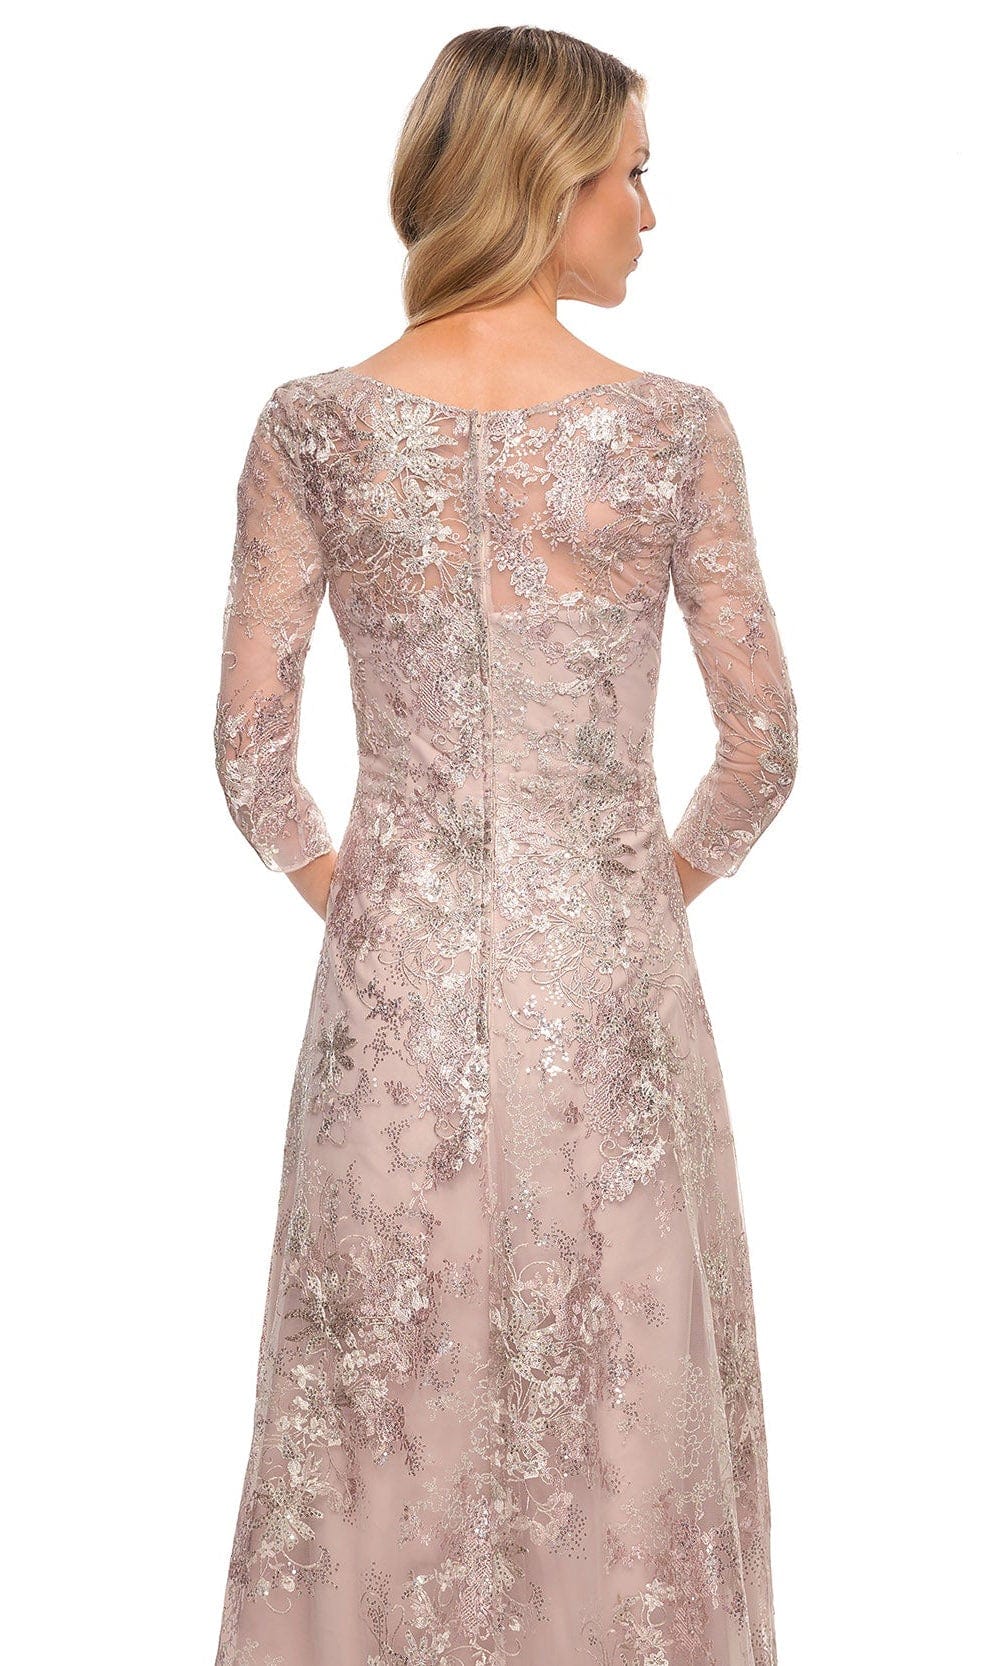 La Femme 30054 - Embroidered V-Neckline A-Line Dress Special Occasion Dress